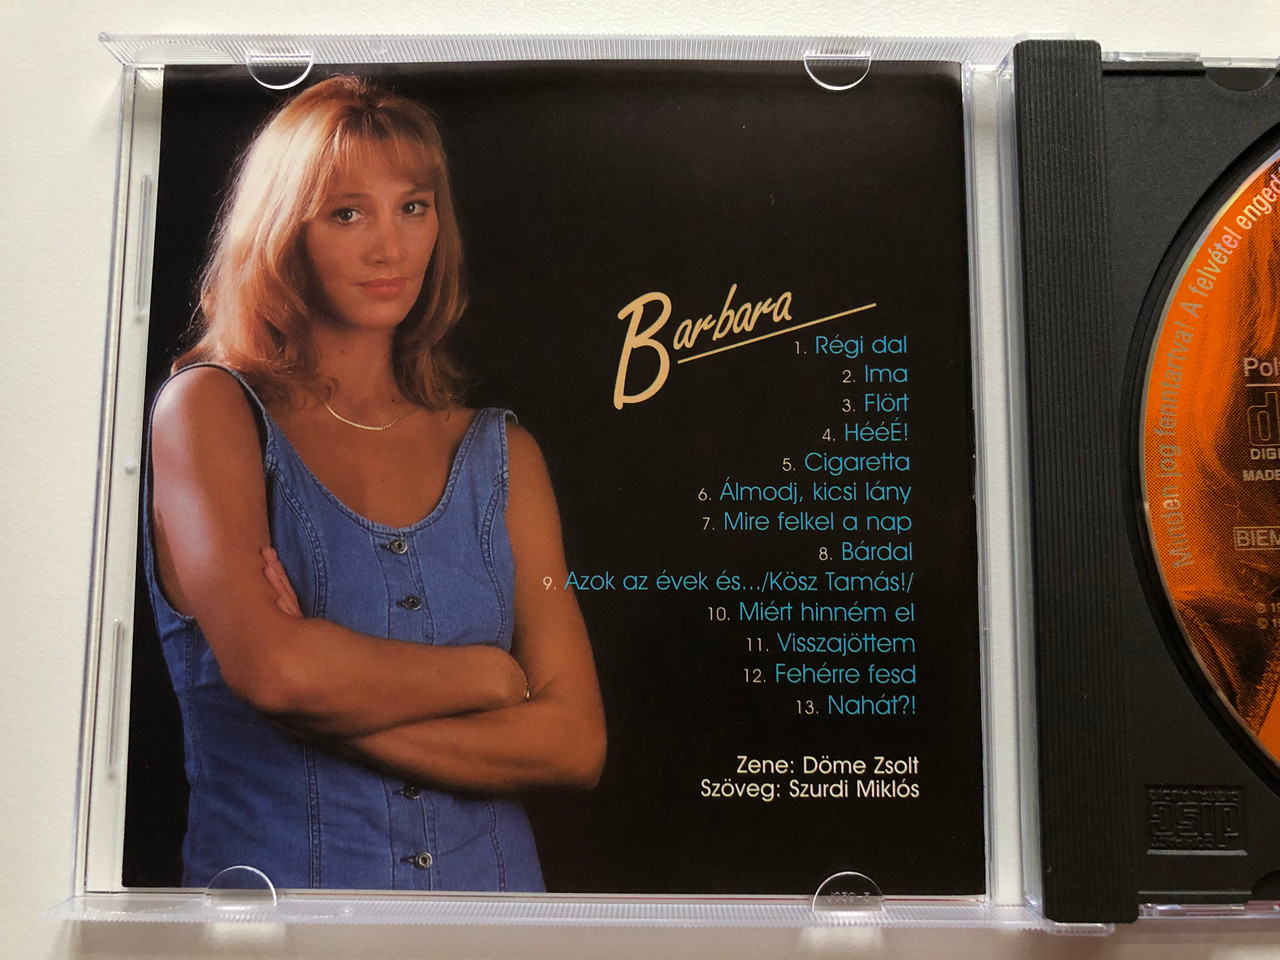 Xantus Barbara – Barbara / Zebra Audio CD 1995 / 529449-2 -  bibleinmylanguage